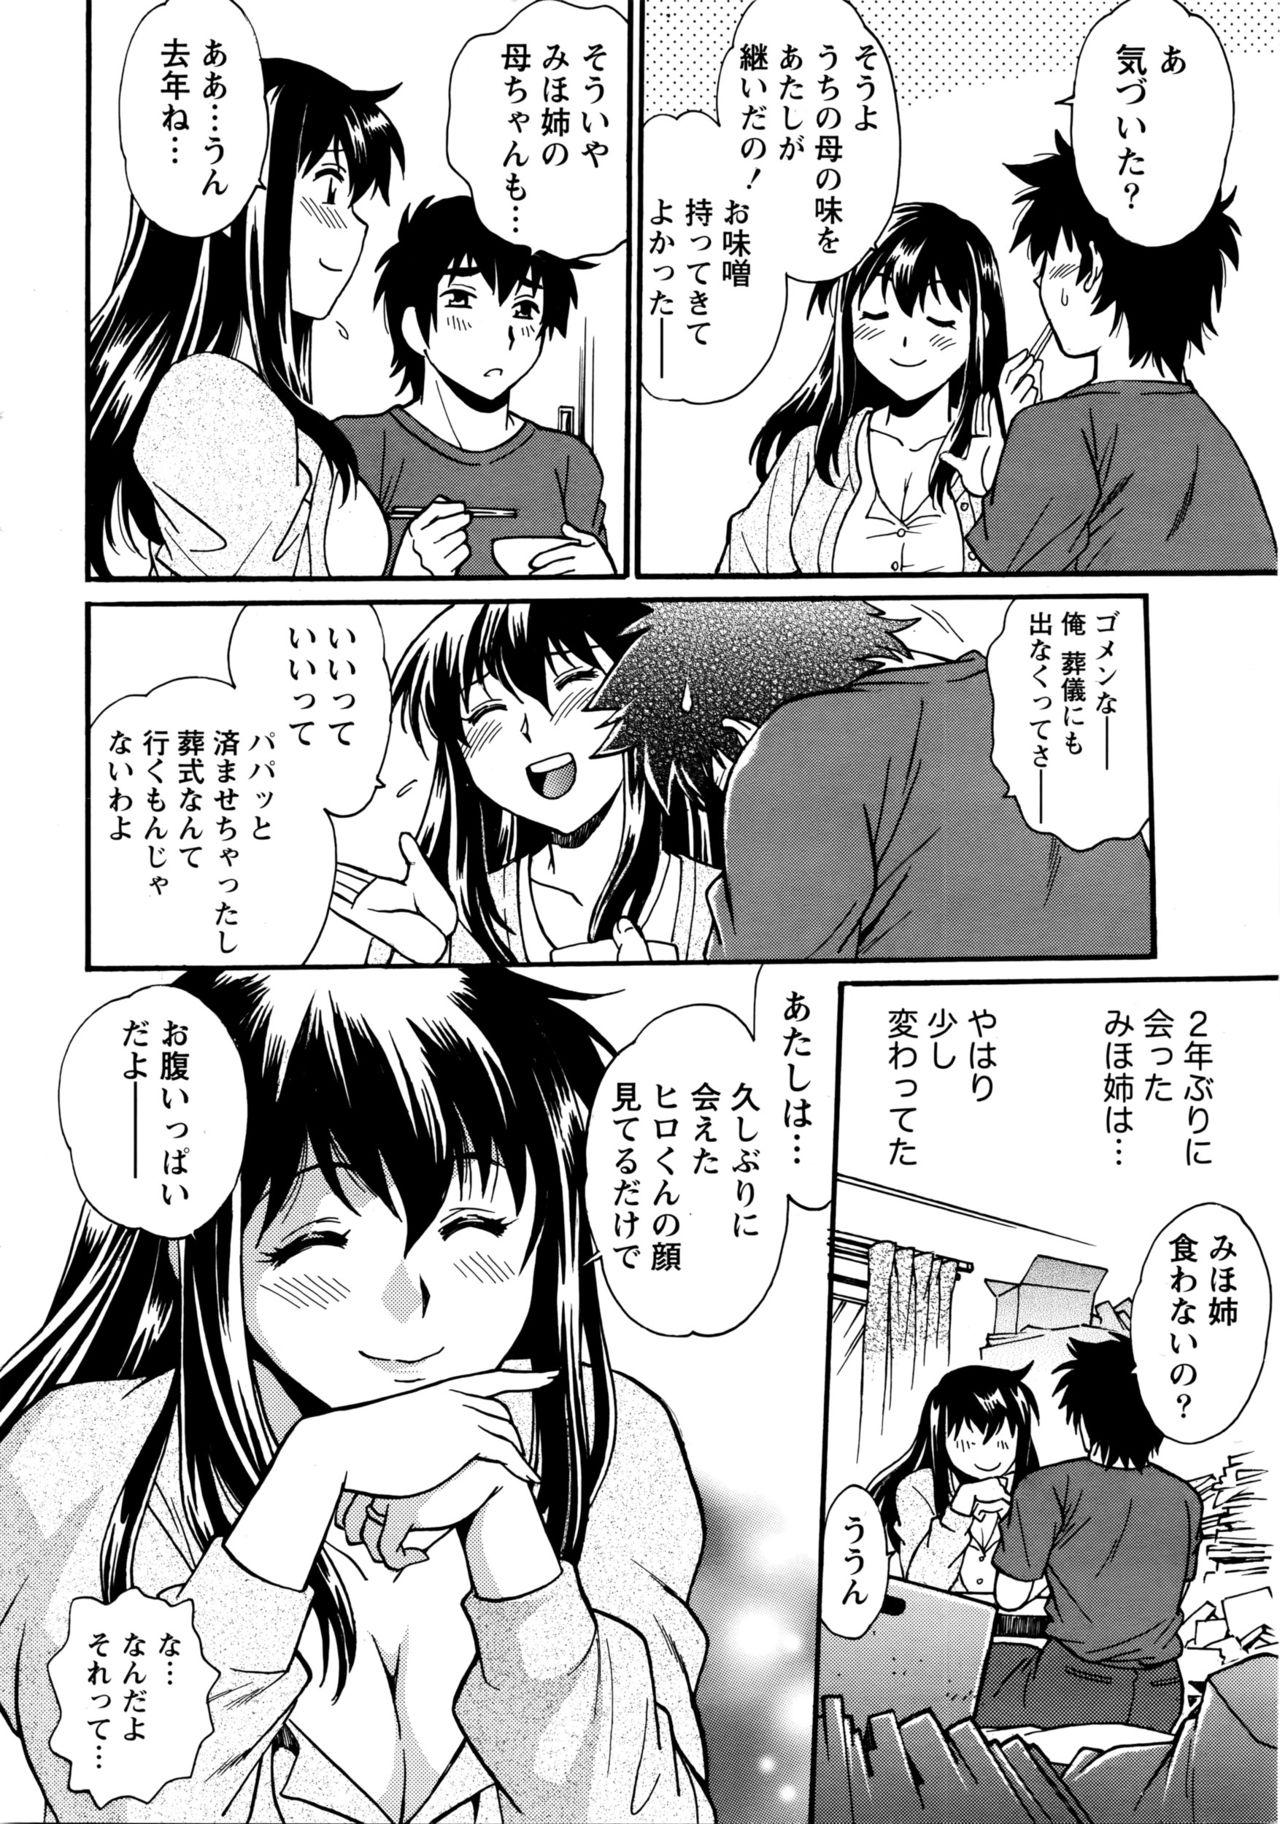 Chacal Kaseifu wa Mama Clothed - Page 11